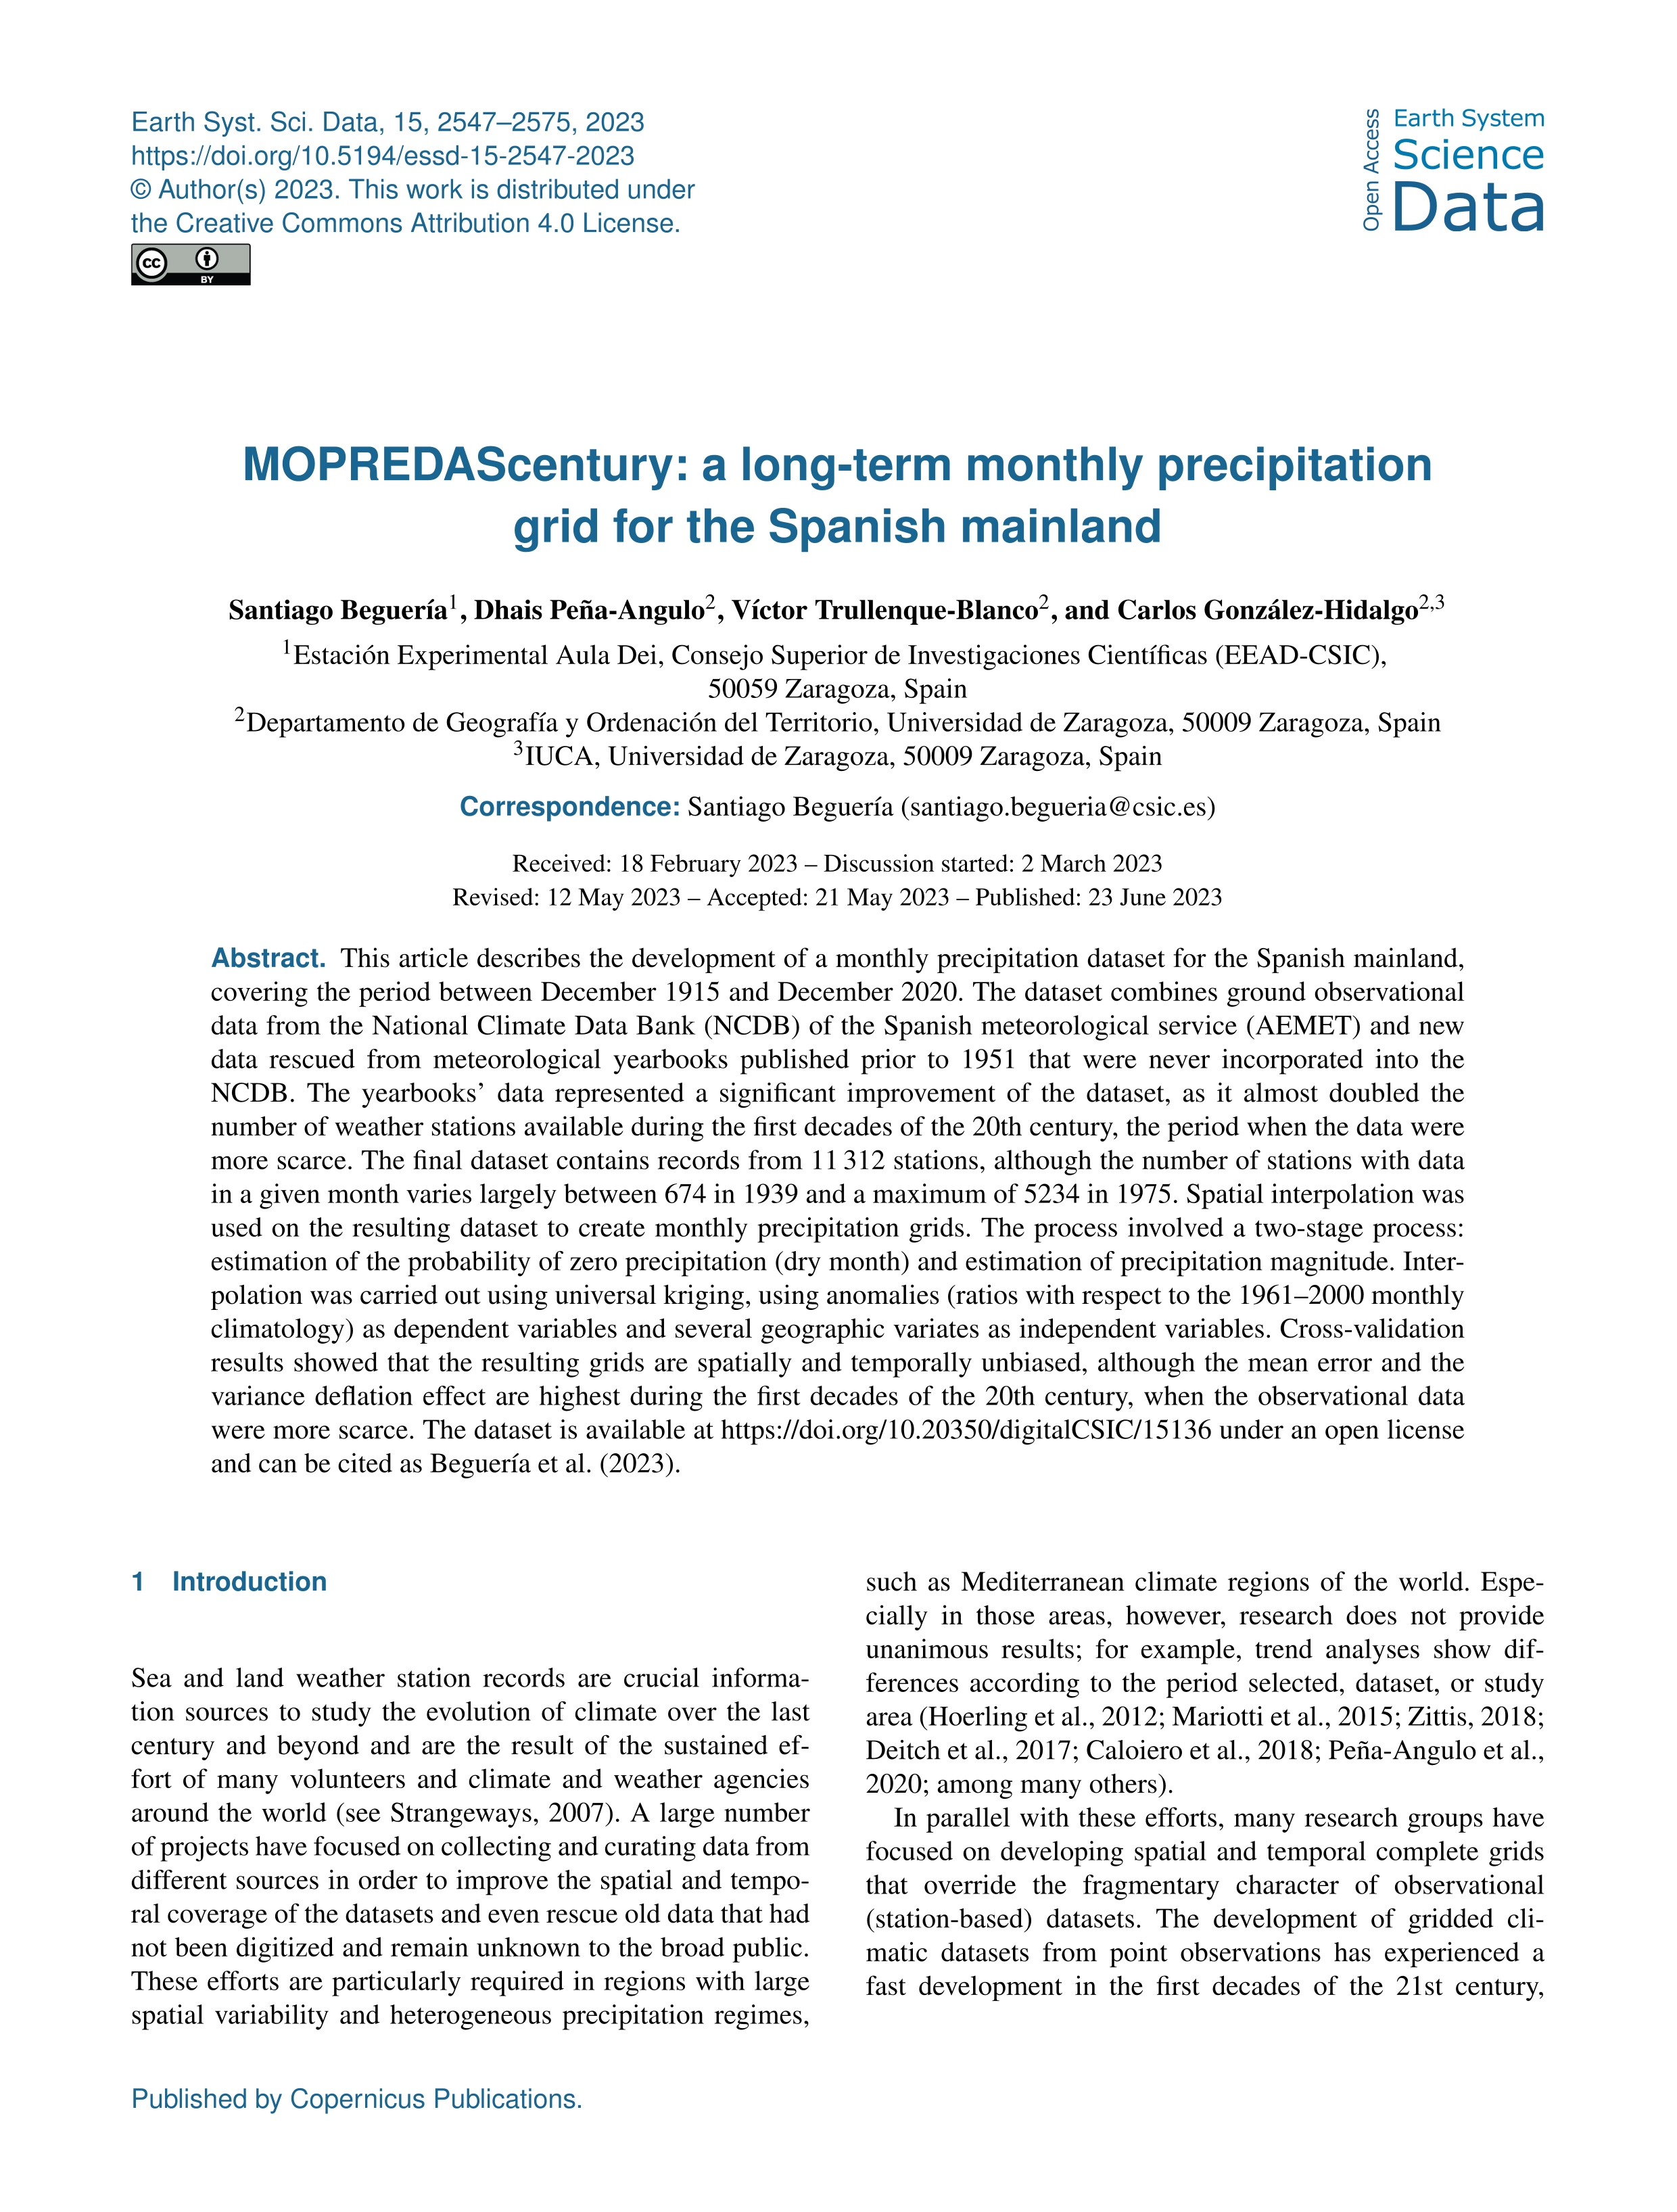 MOPREDAScentury: a long-term monthly precipitation grid for the Spanish mainland